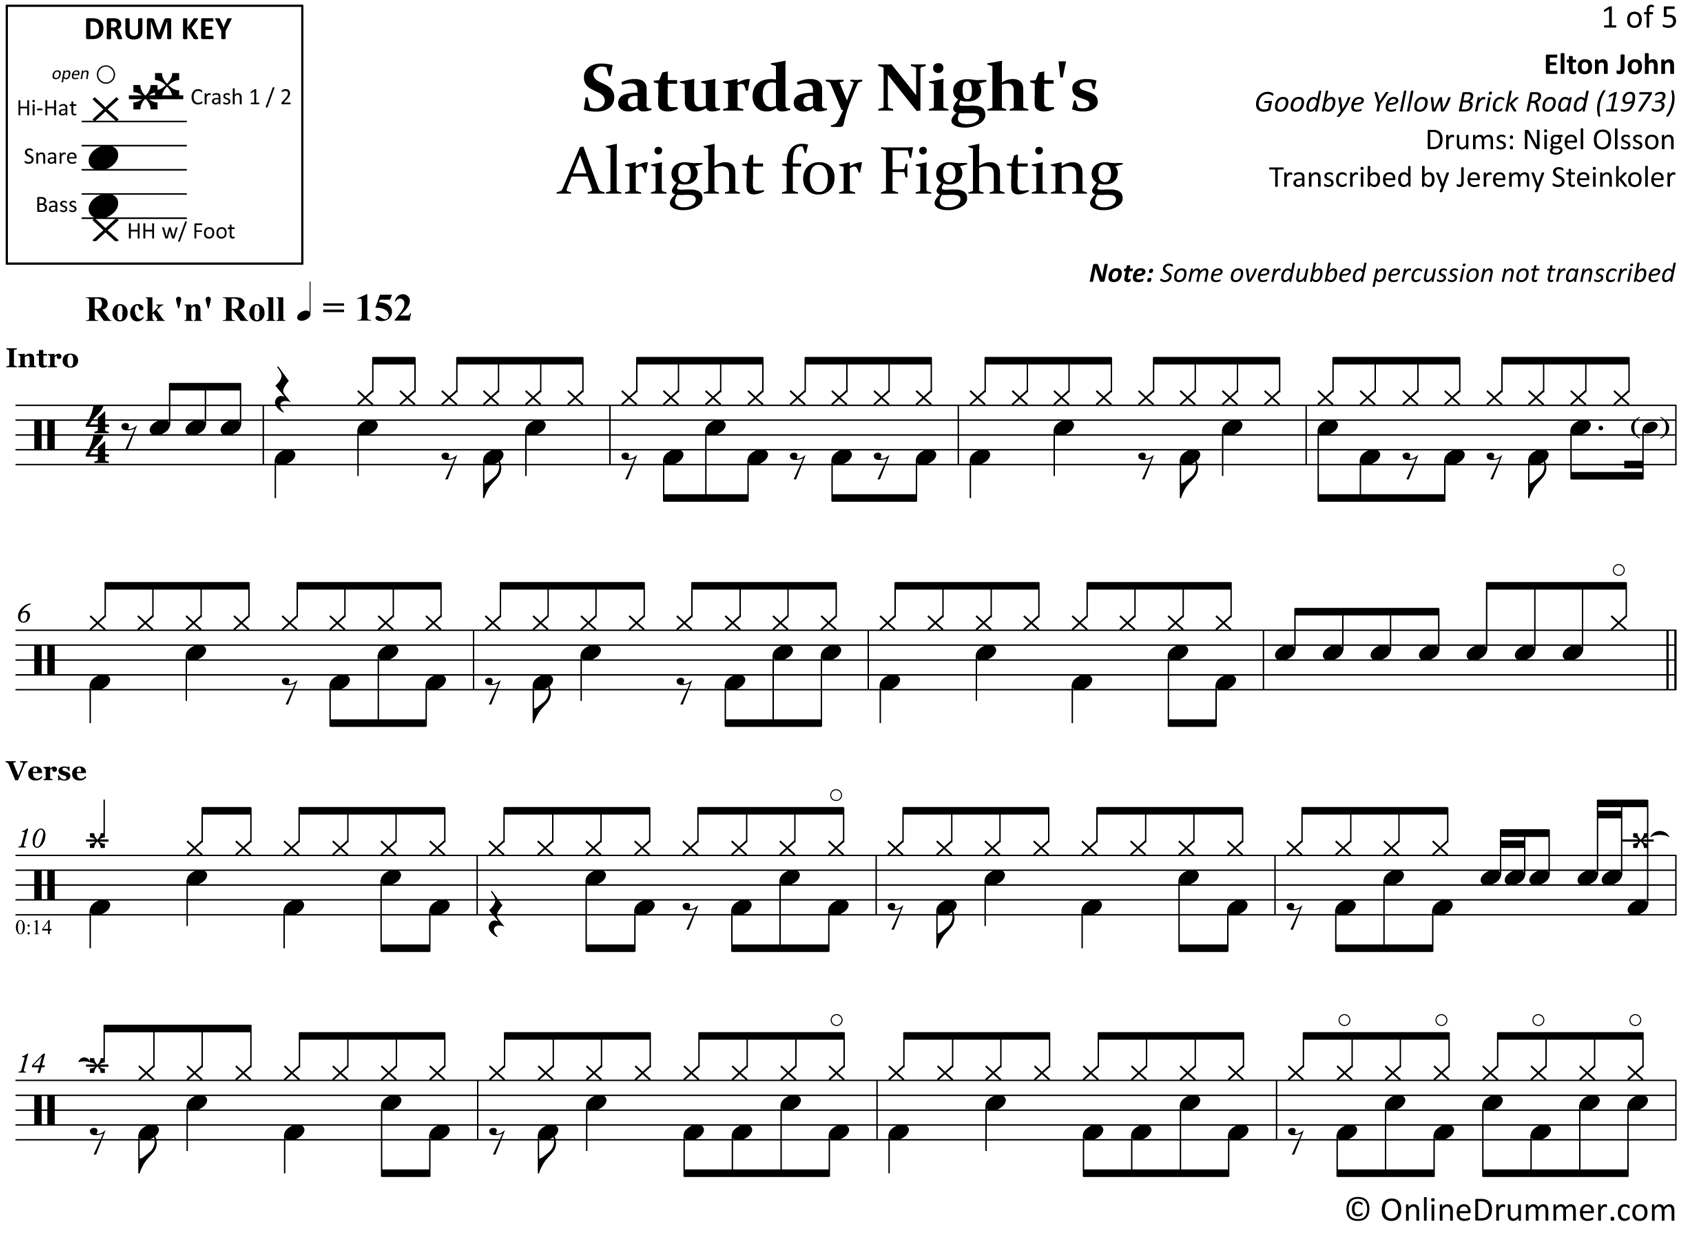 Saturday Night's Alright for Fighting - Elton John - Drum Sheet Music